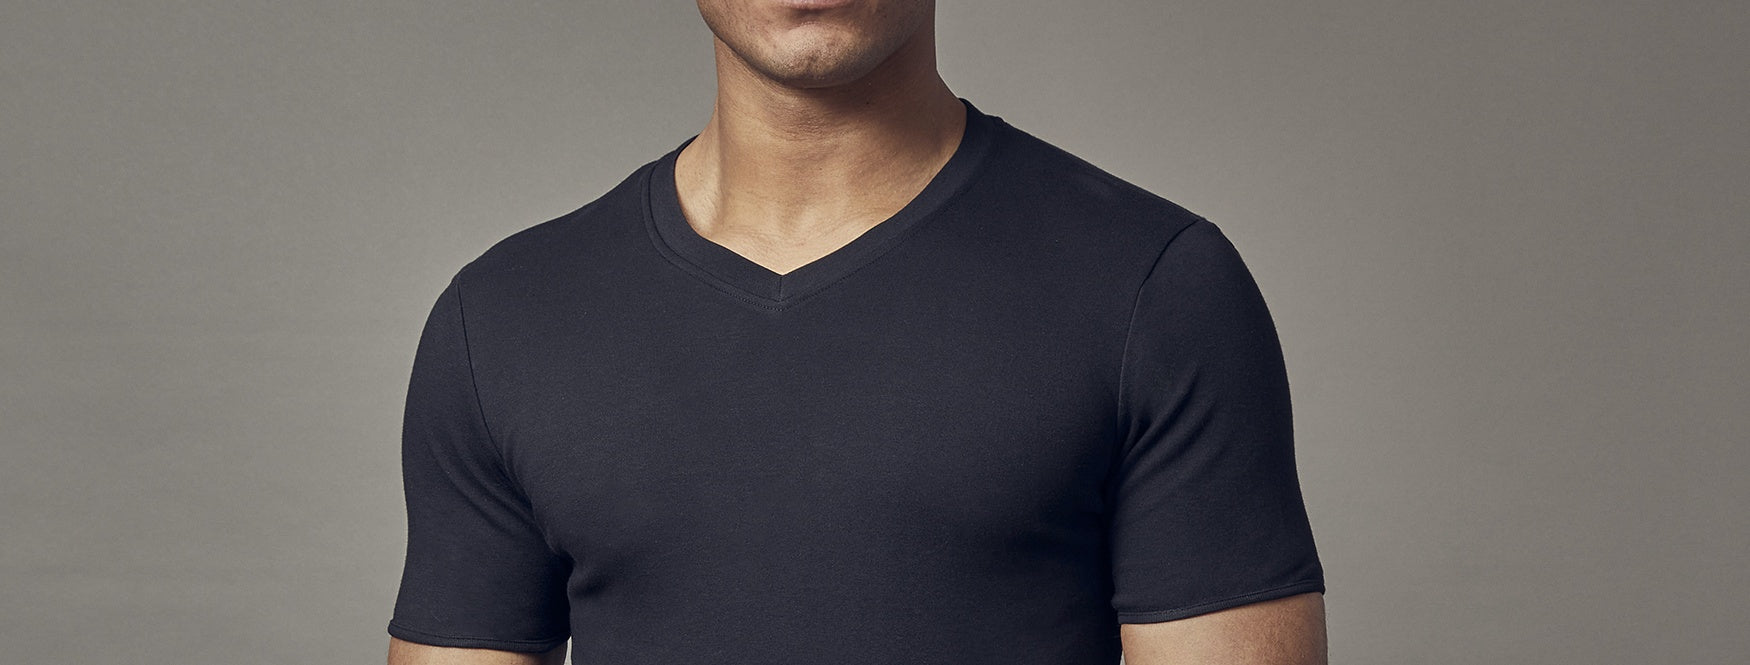 T Shirts For Men Fashion Deep V Neck Short Sleeved T Shirt Cotton